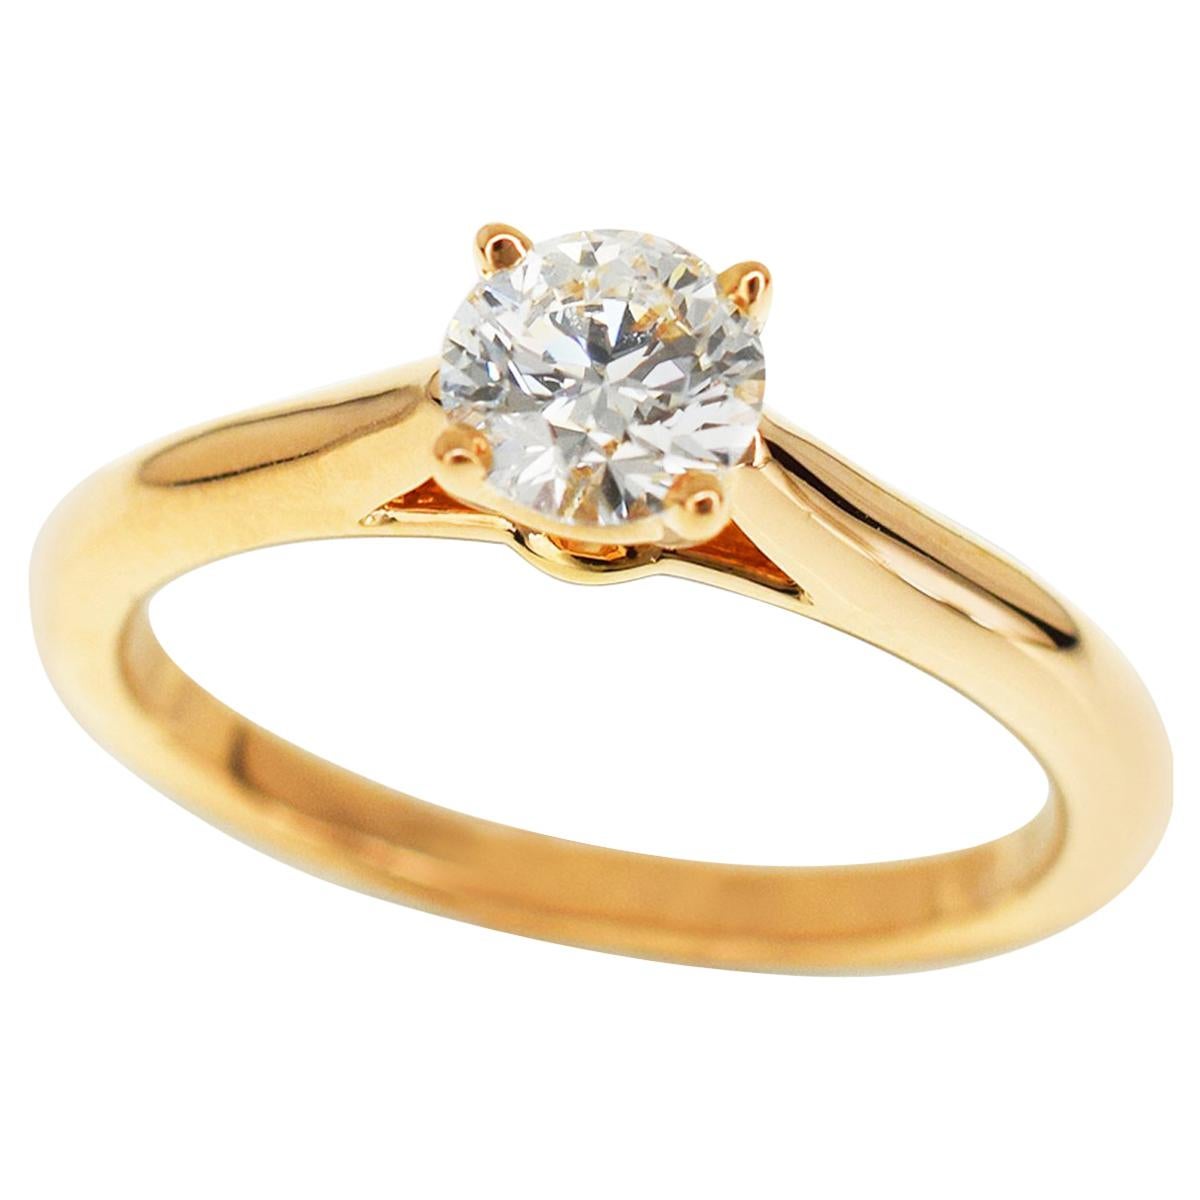 5 carat cartier engagement ring price